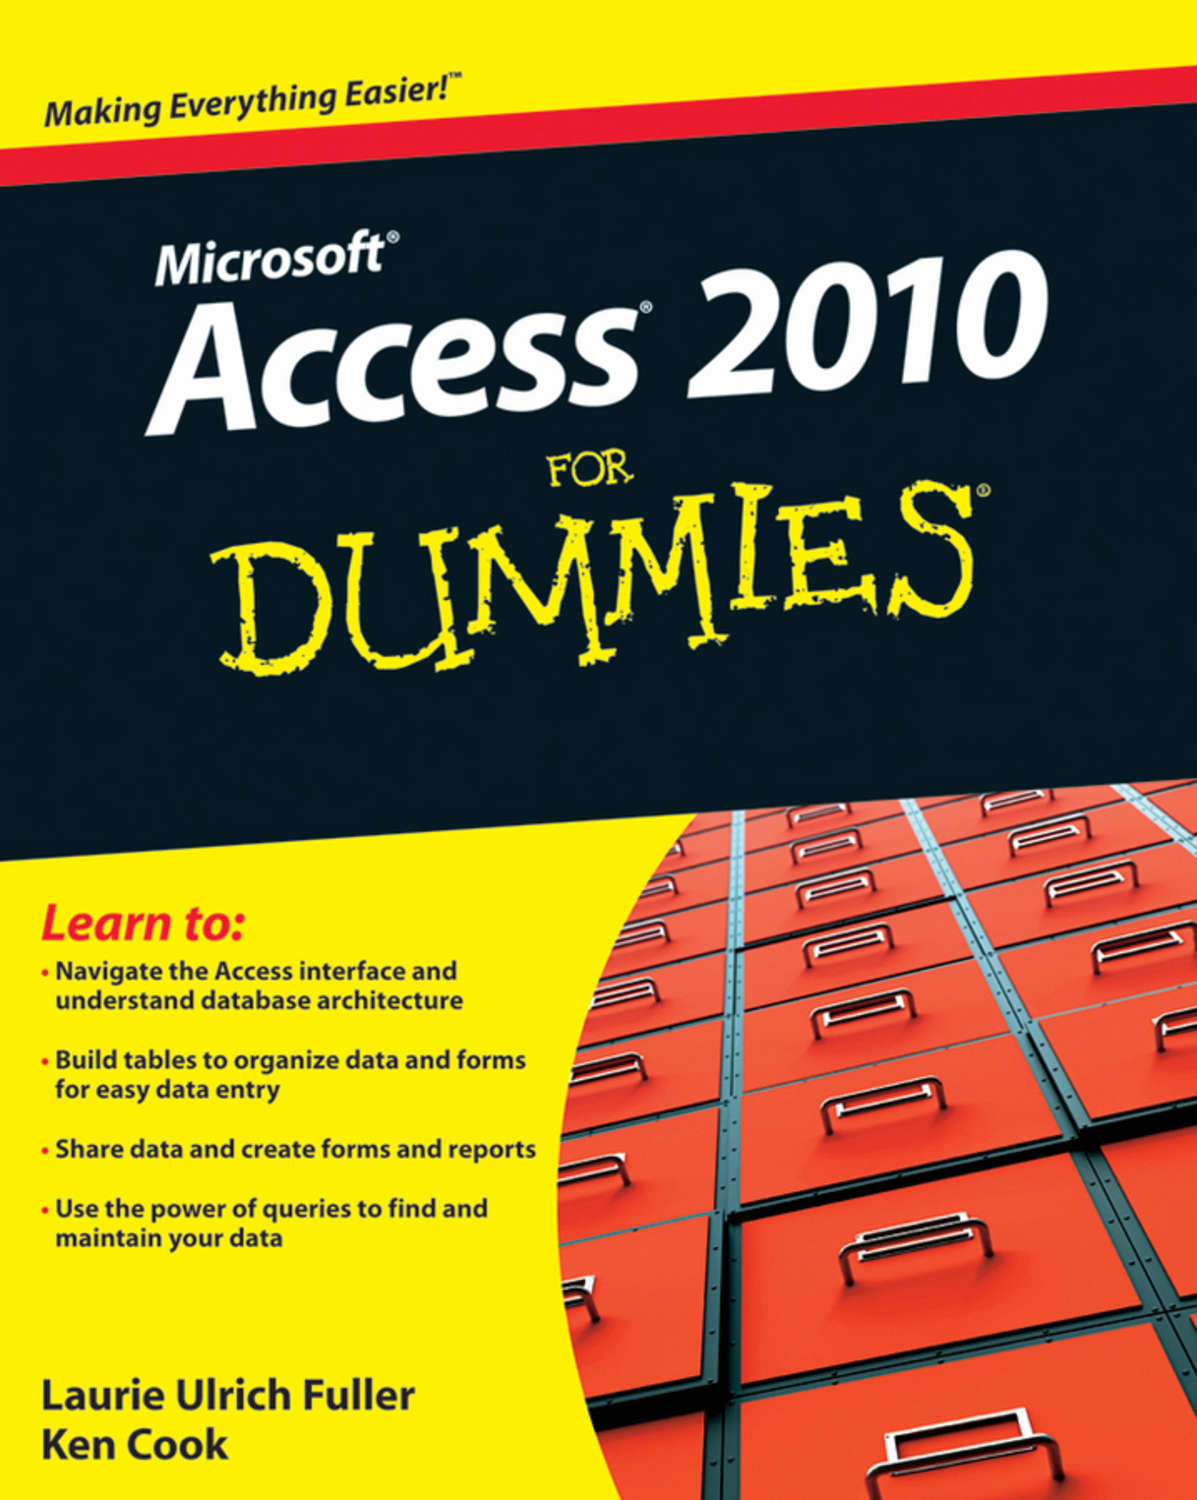 Book access. Книги access. Access 2010. Книги по access 2010. Project 2010 for Dummies.